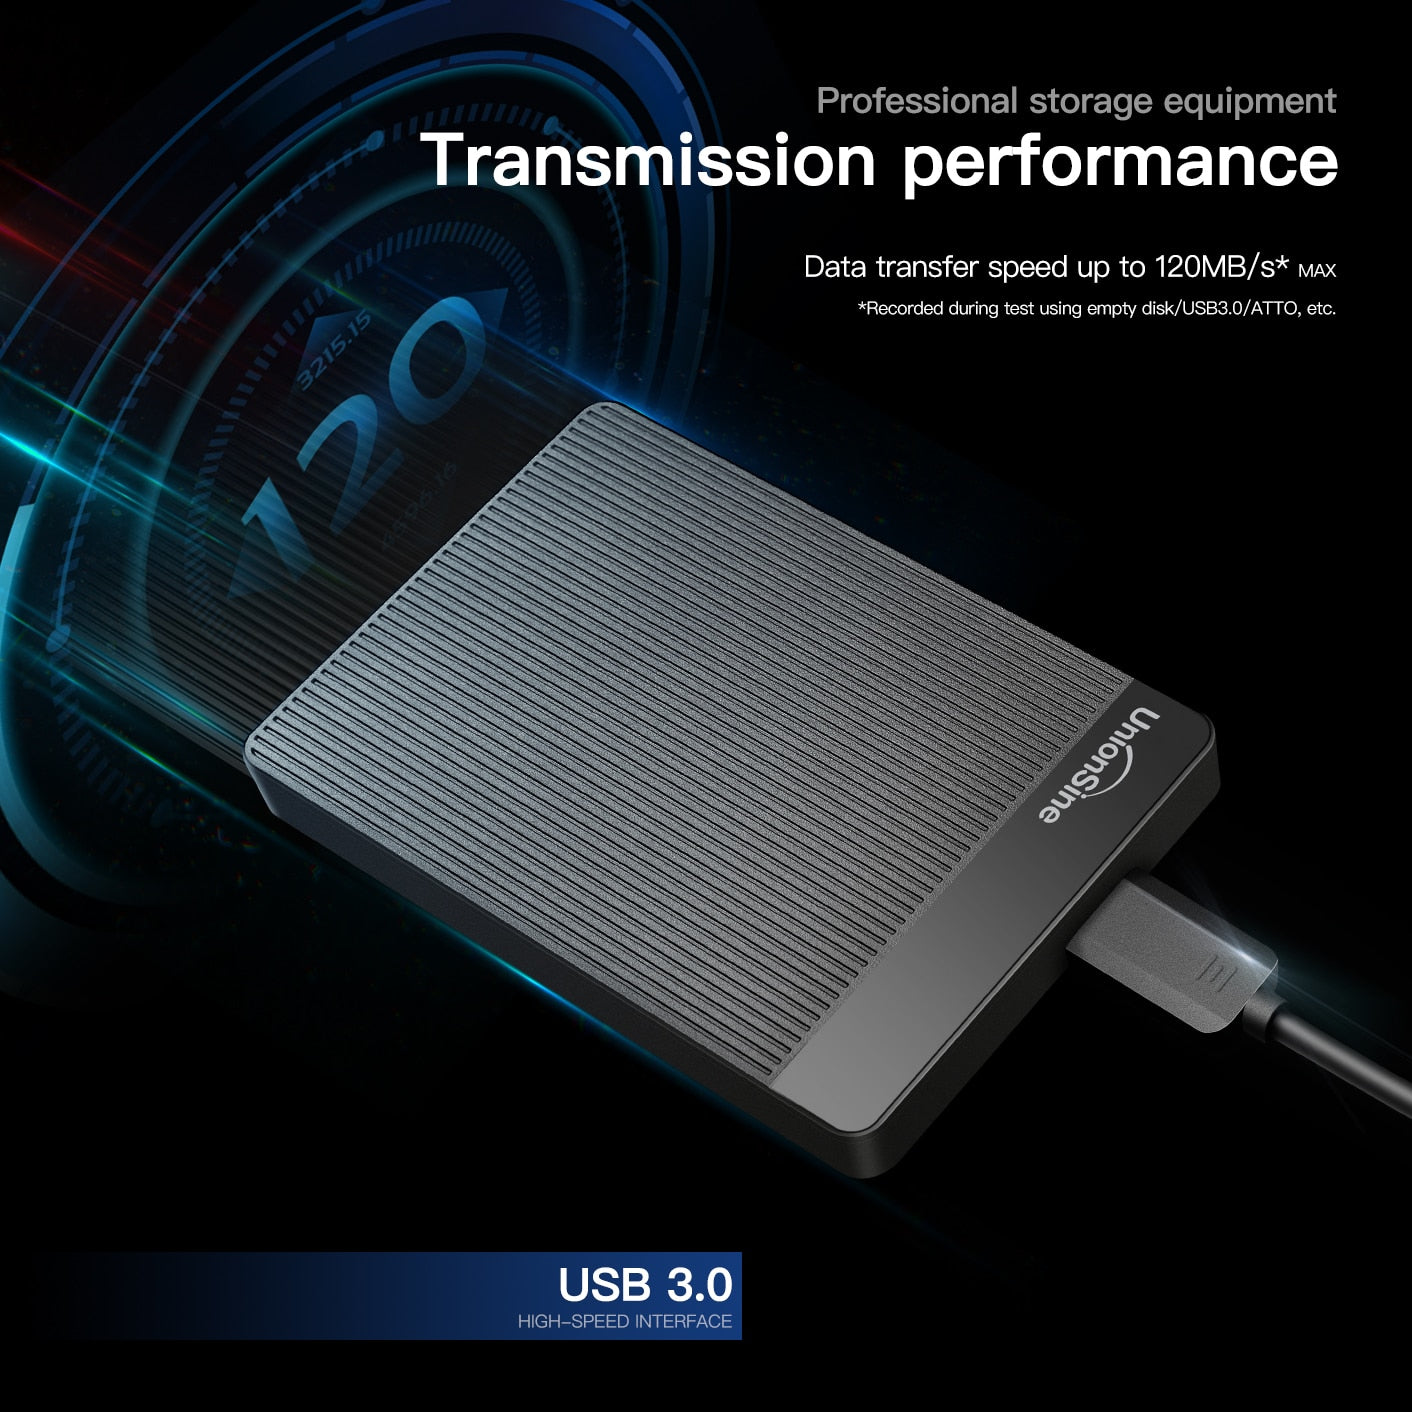 UnionSine HDD 2.5" Portable External Hard Drive 2tb/1tb/500gb/750gb Disk memory USB 3.0 Storage for PC/Mac/Desktop/MacBook/TV